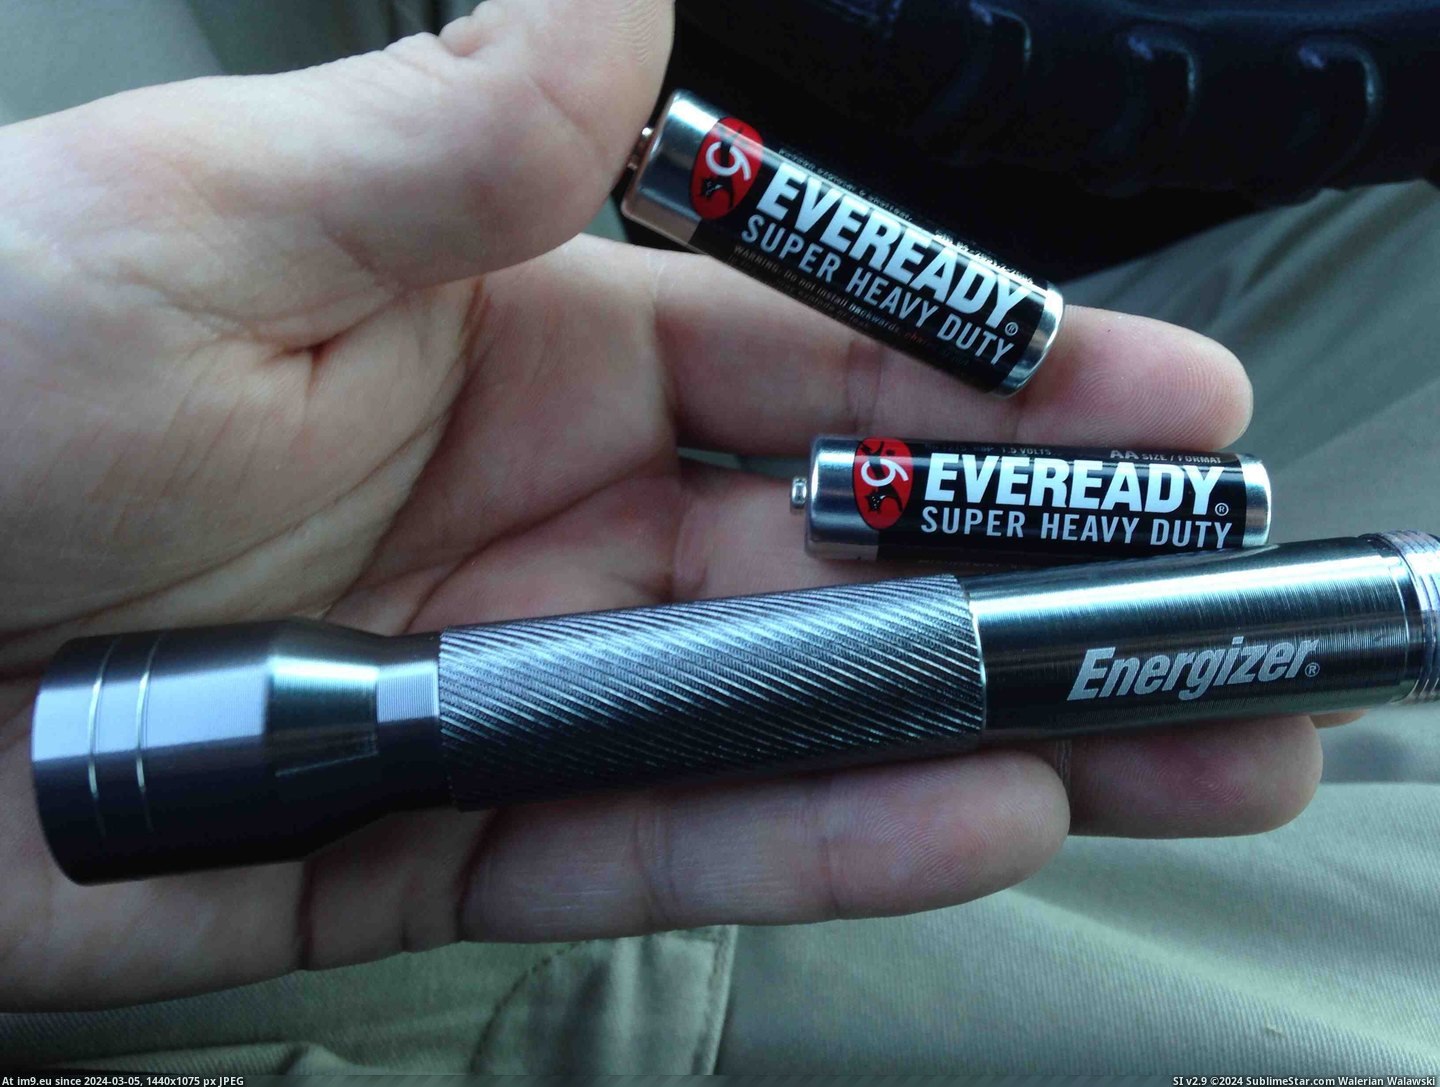 #Bought #Batteries #Eveready #Flashlight #Energizer [Pics] bought an energizer flashlight, it came with eveready batteries Pic. (Bild von album My r/PICS favs))